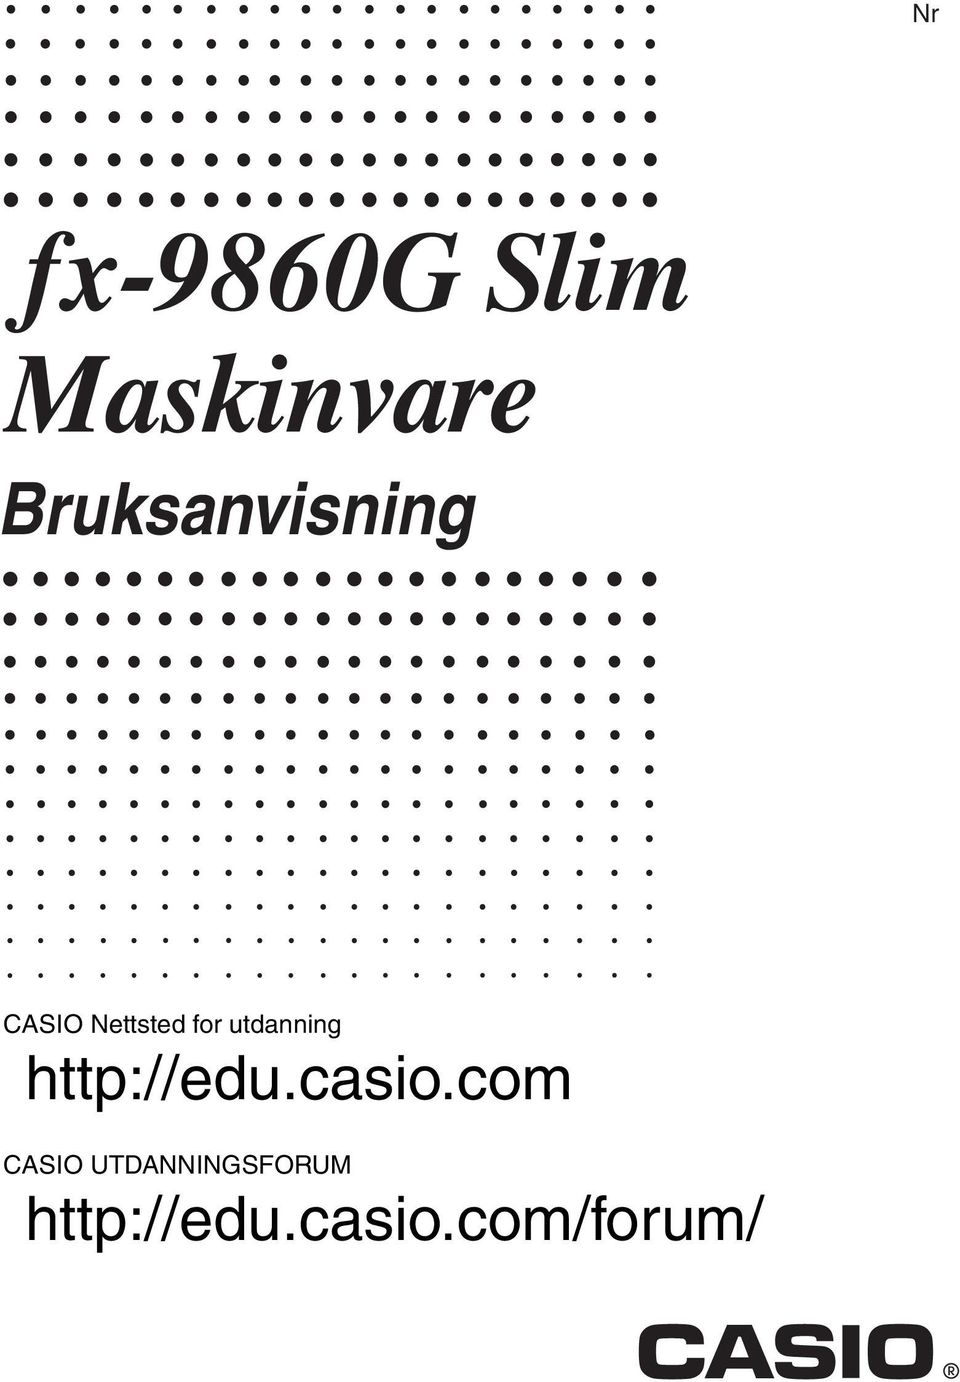 fx-9860g Slim Maskinvare Bruksanvisning - PDF Free Download